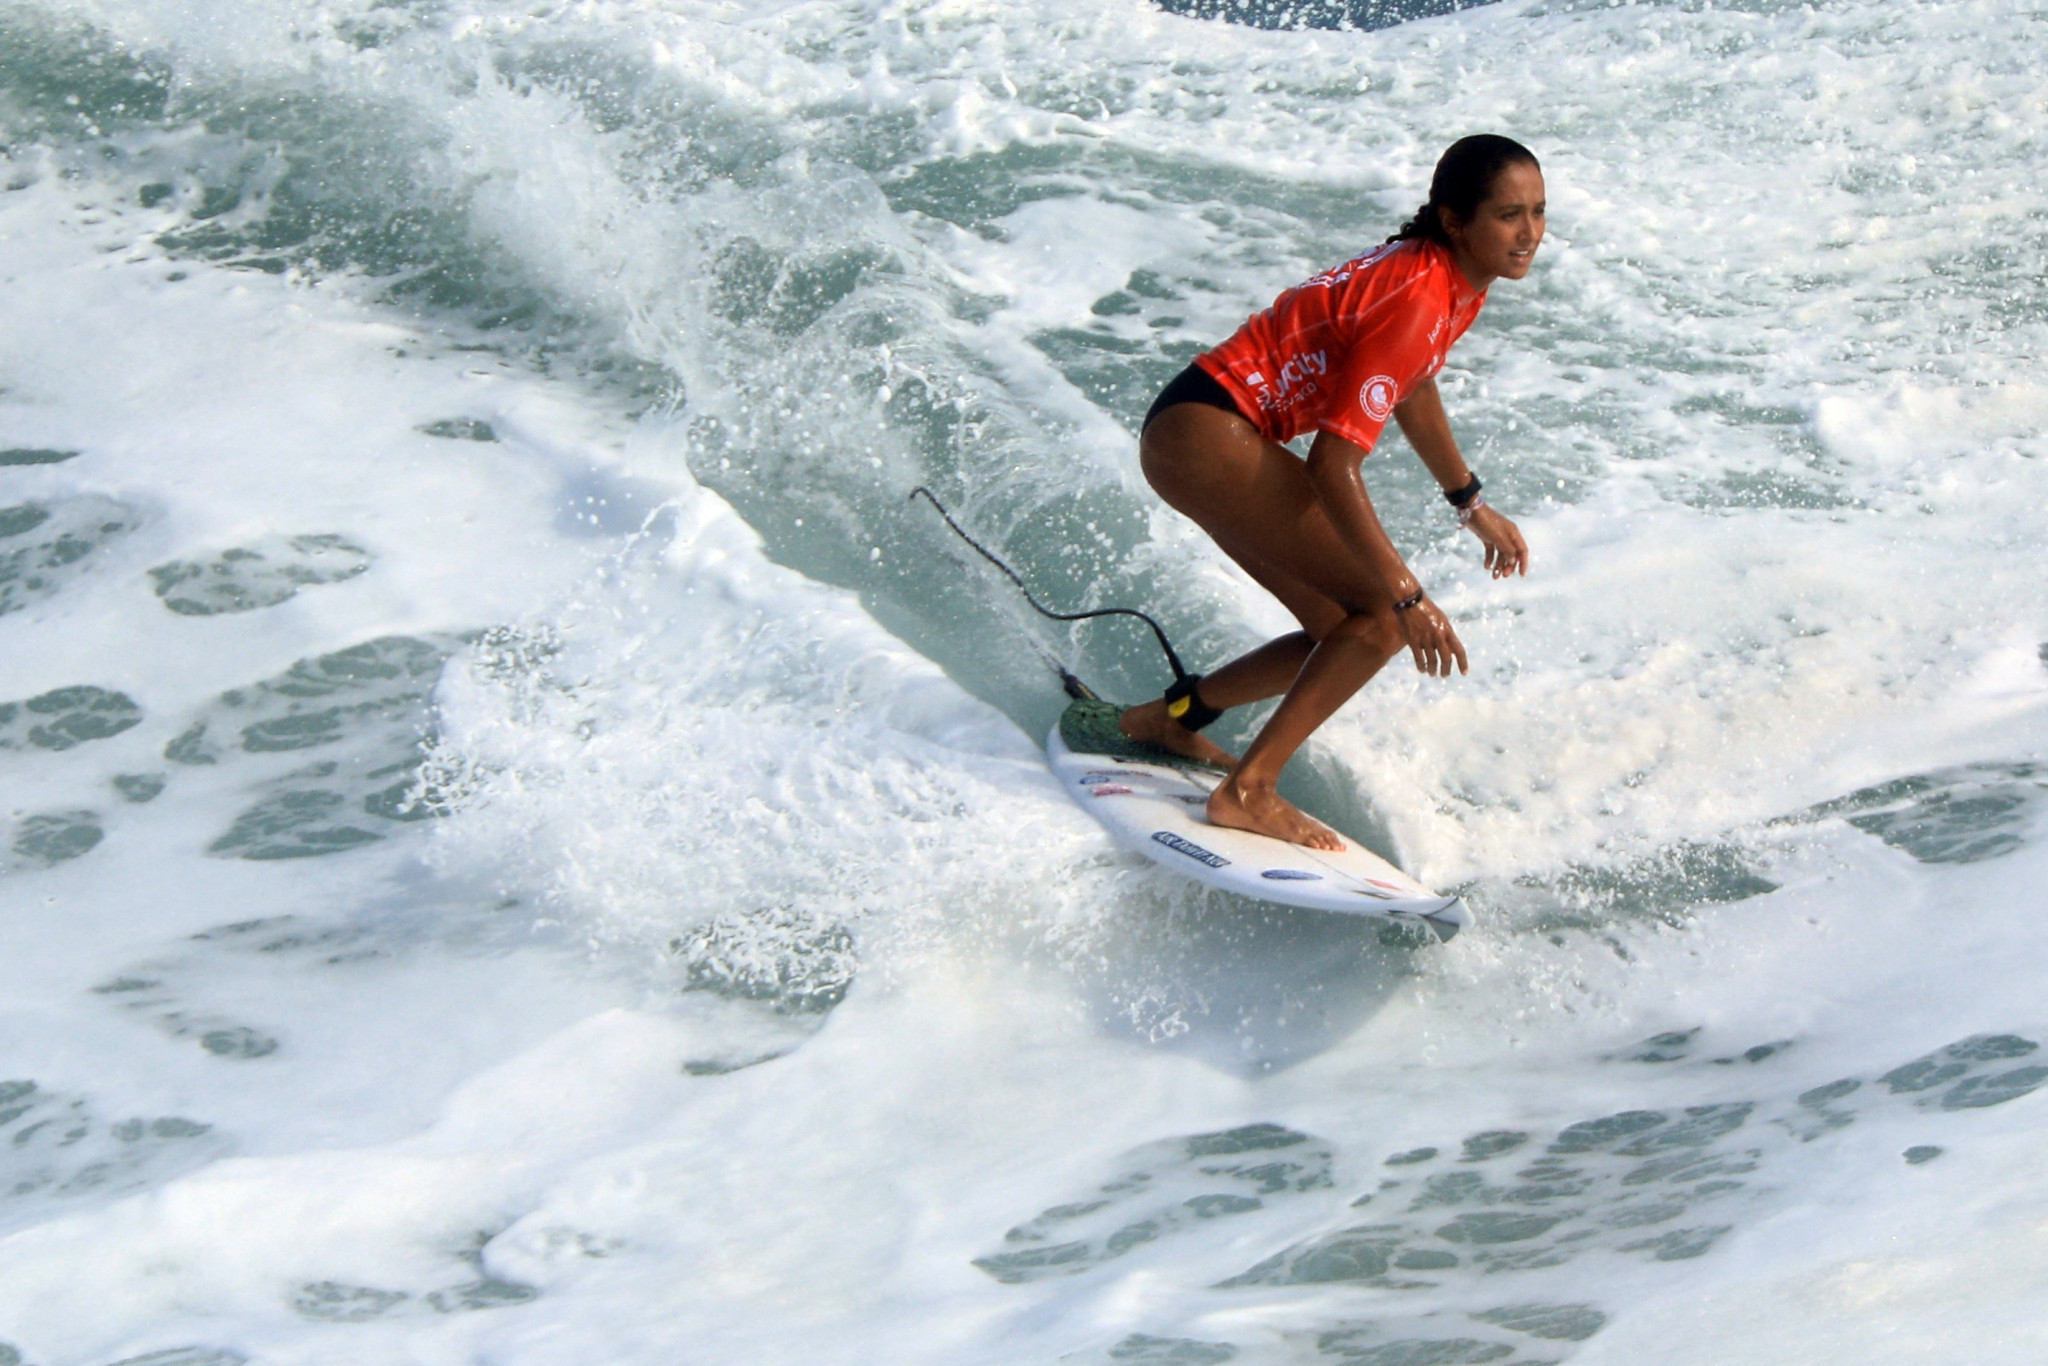 Tahitian surfer relishing return to home venue after sealing Paris 2024 ticket